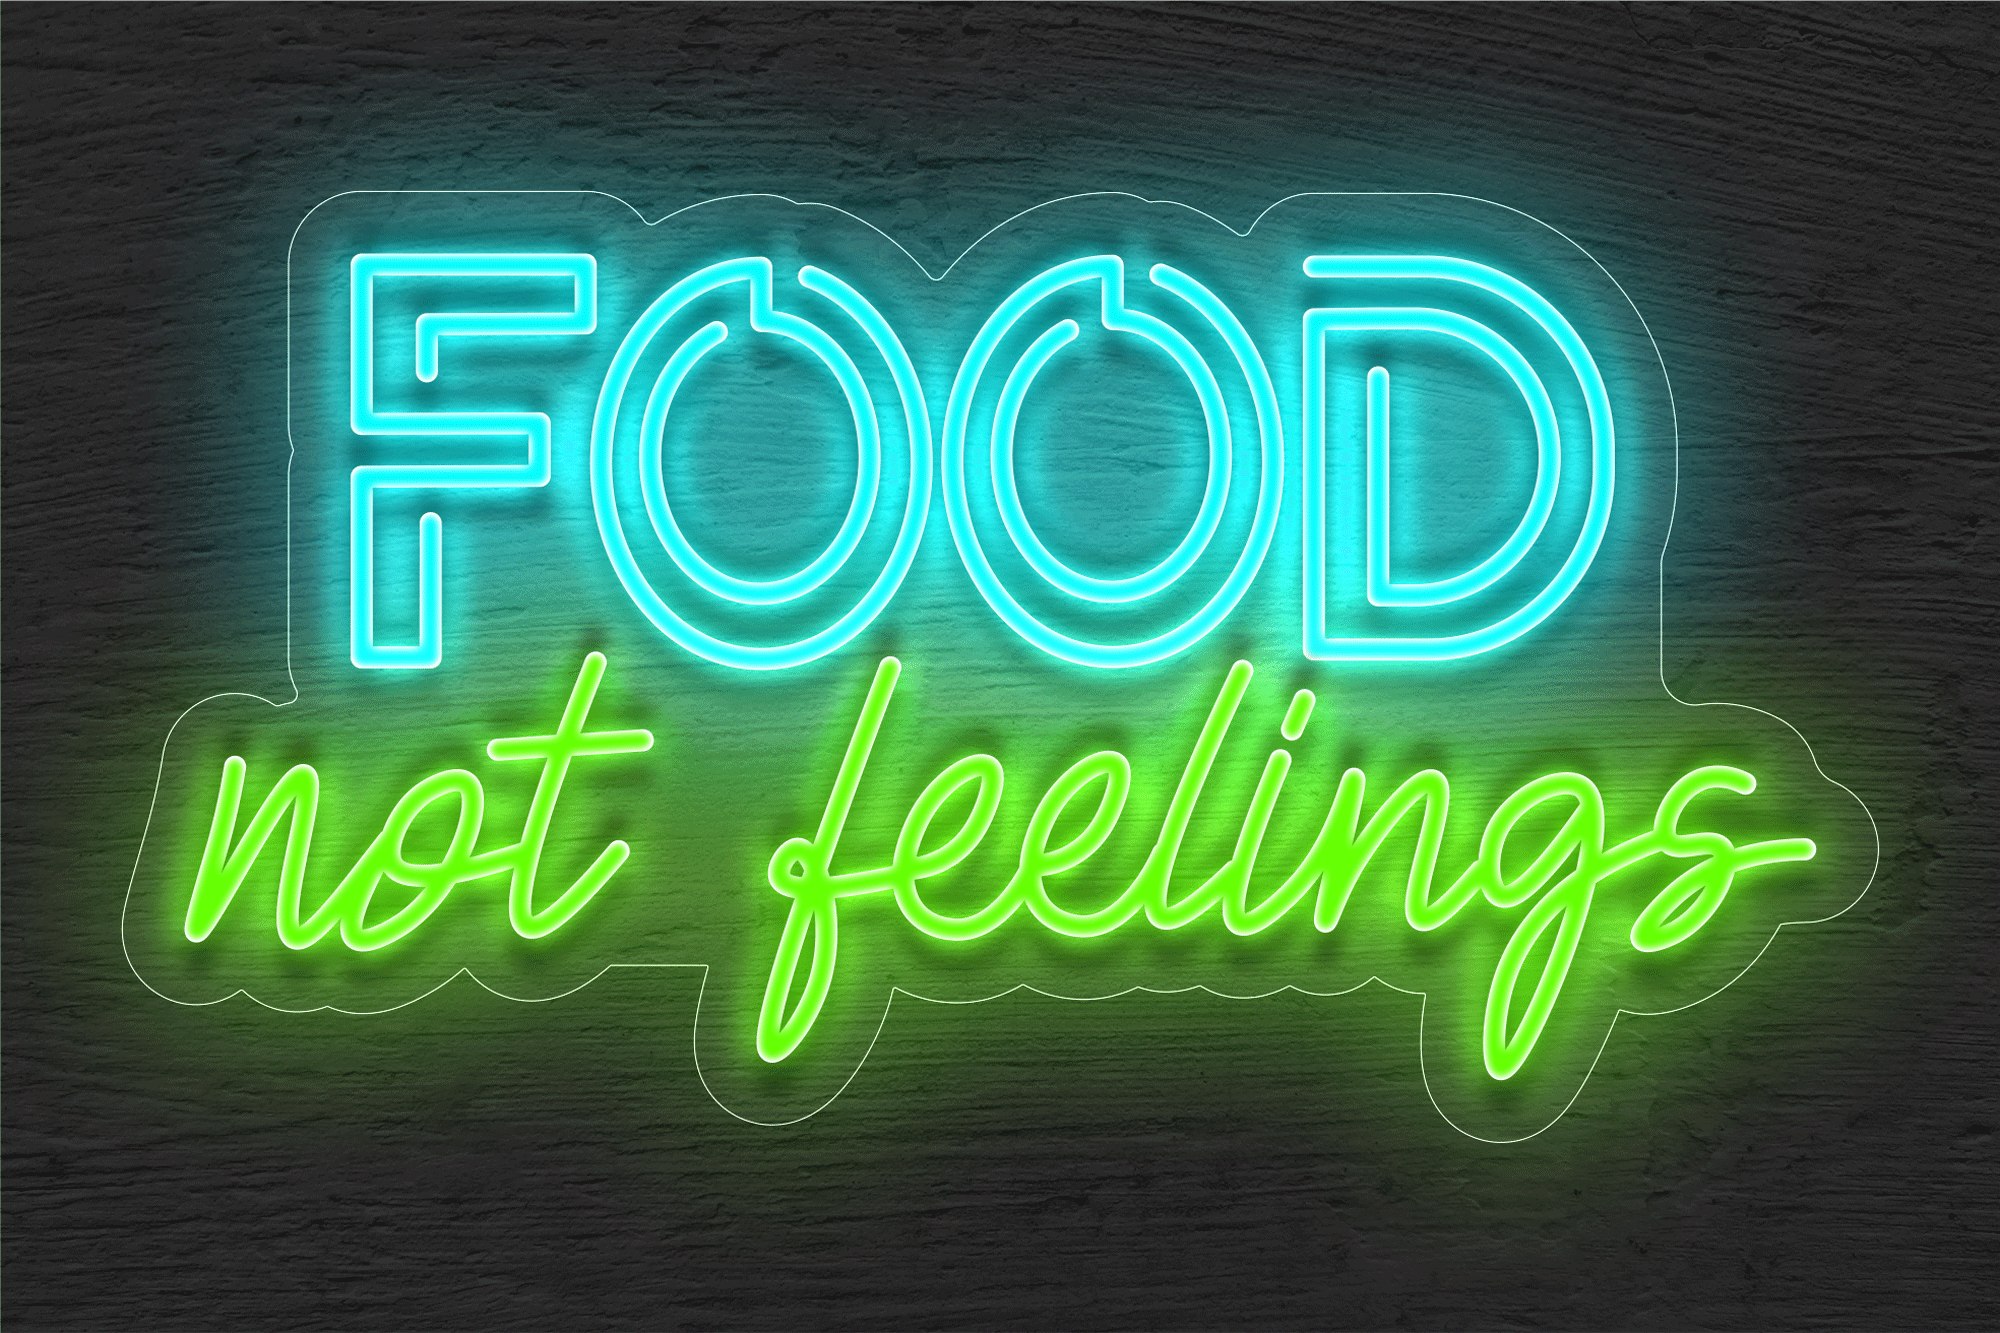 "Food Not Feelings" LED Neon Sign